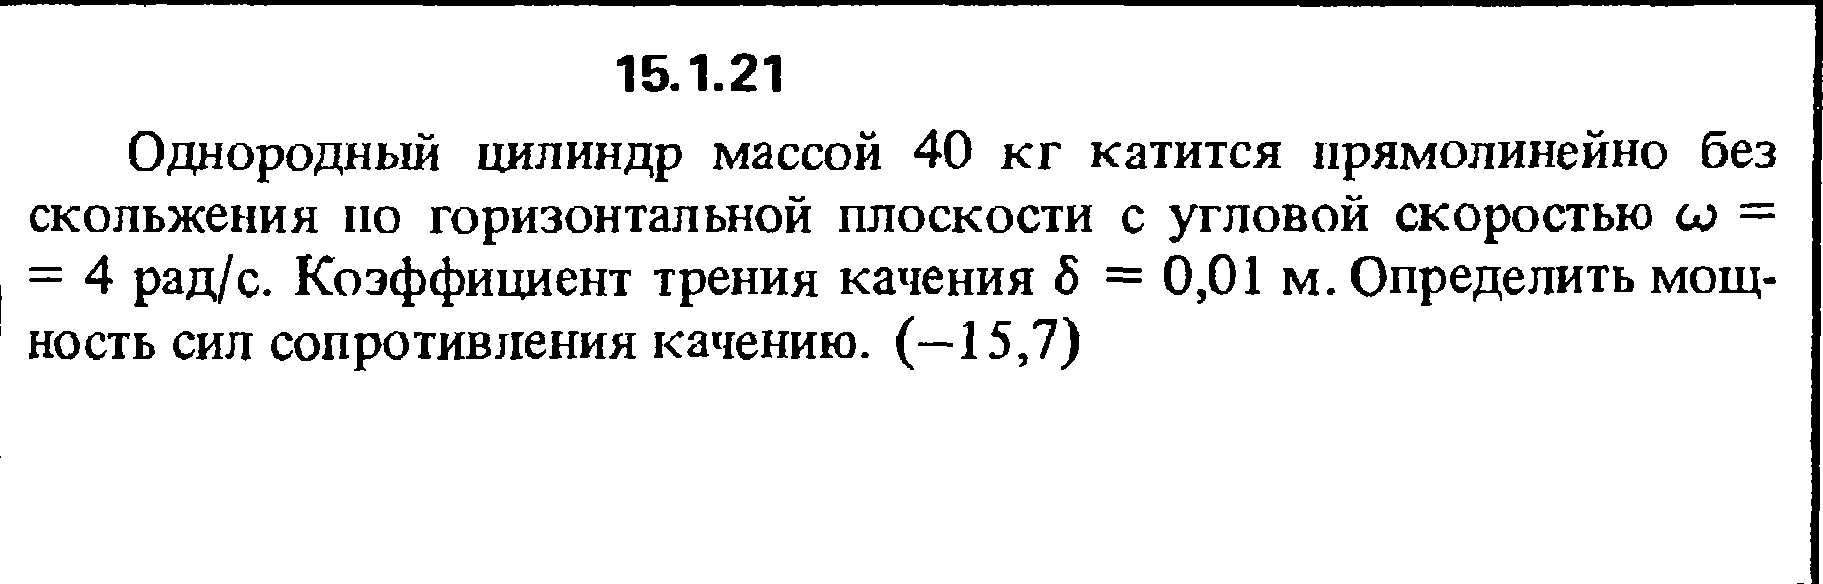 Решение задачи 15.1.21 из сборника Кепе О.Е. 1989 года